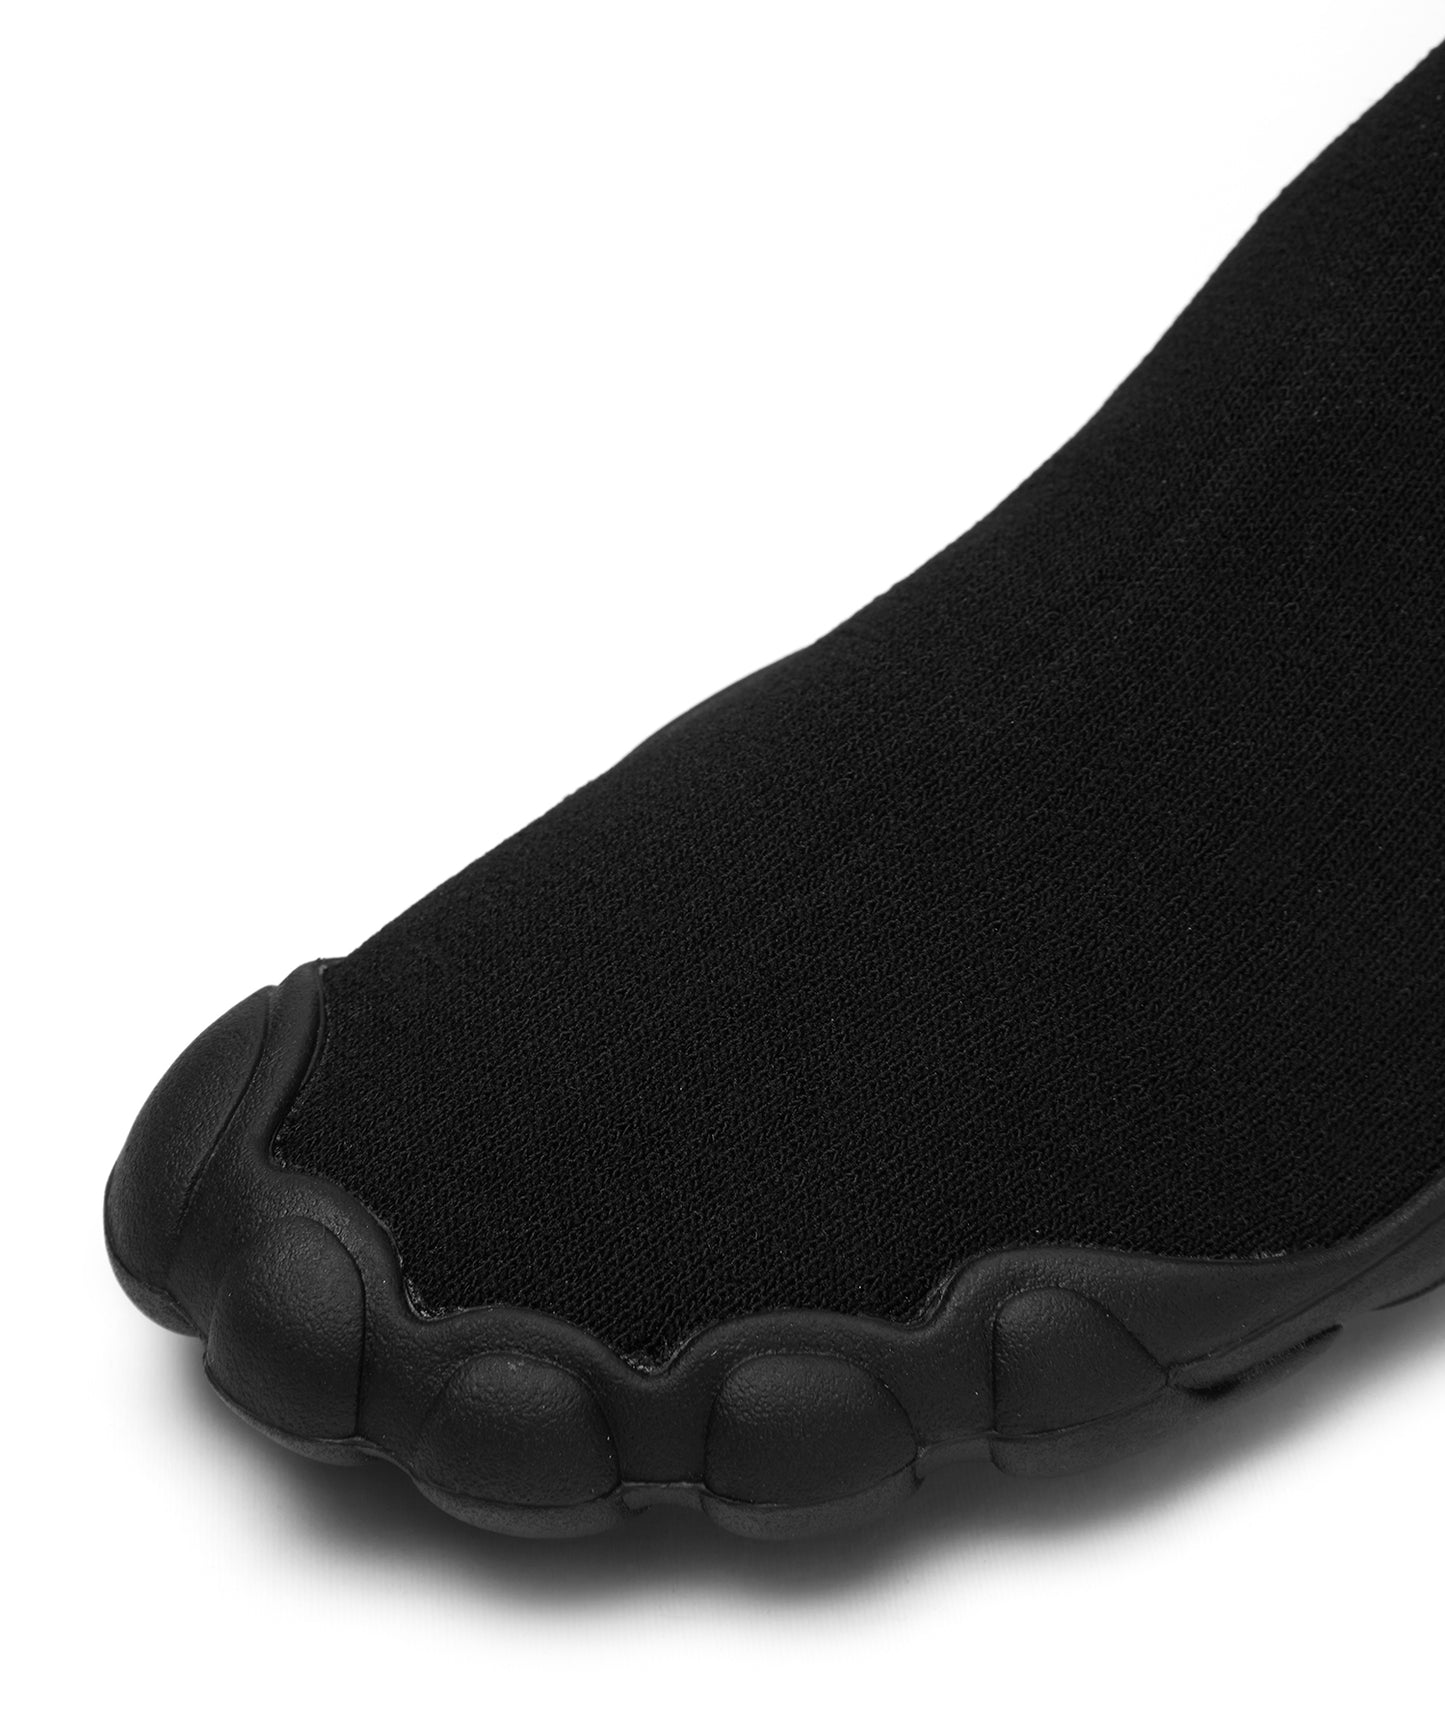 Five-toe Knit Sock Long Boots